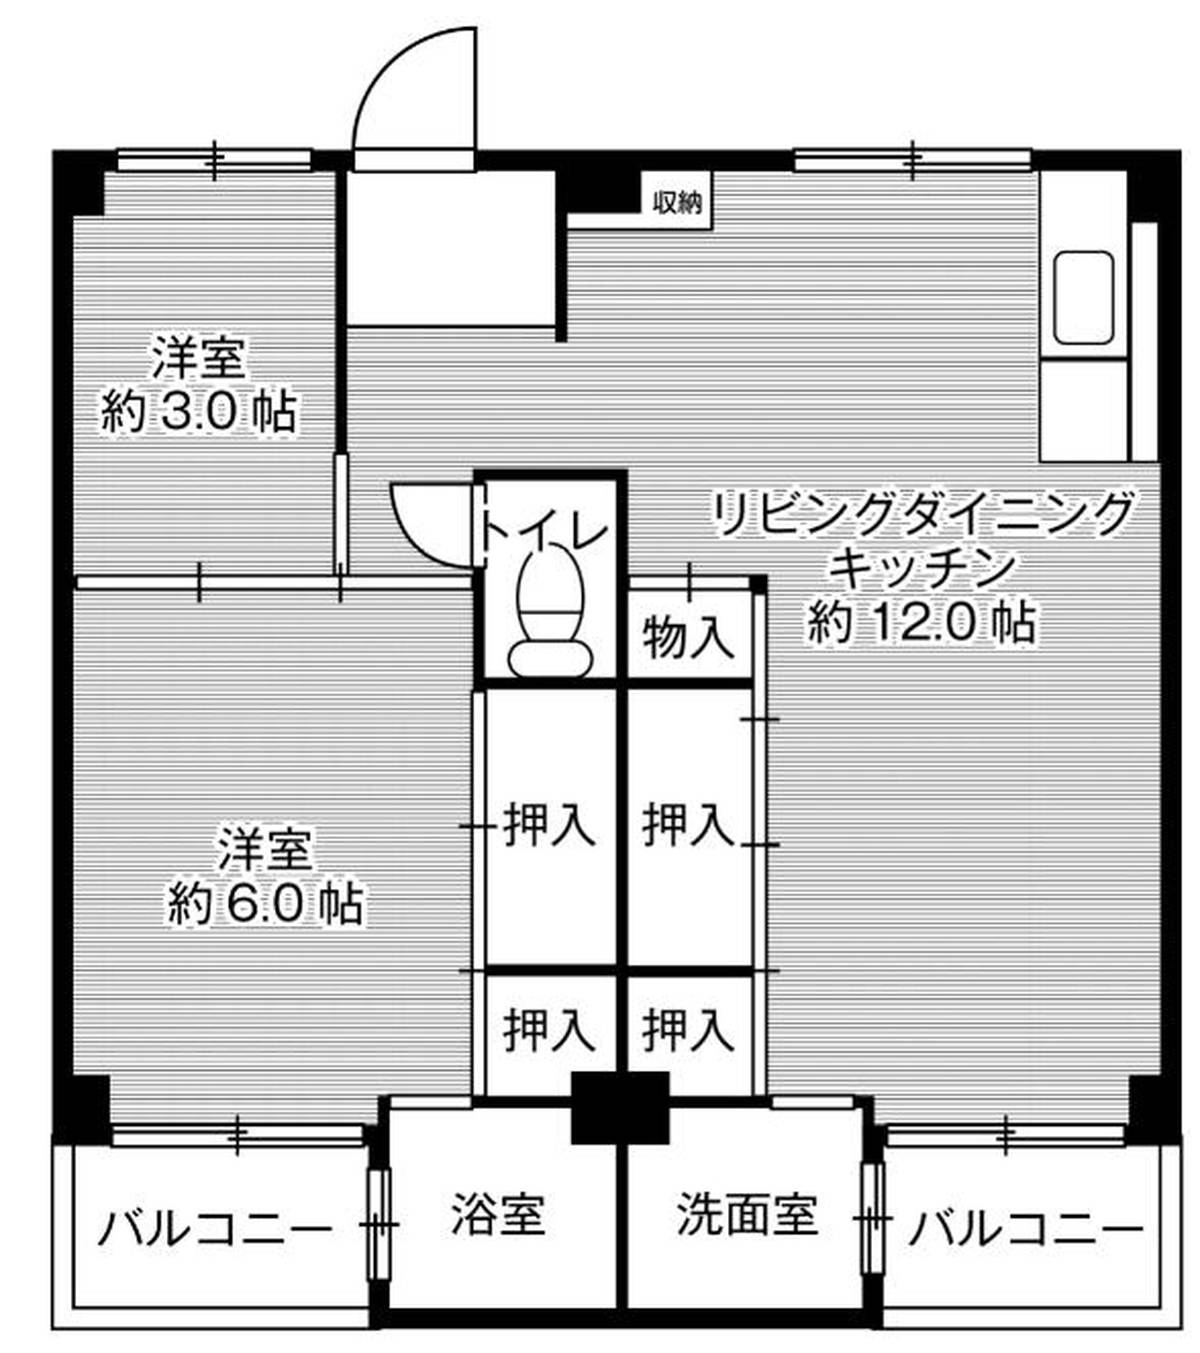 2LDK floorplan of Village House Seta in Otsu-shi